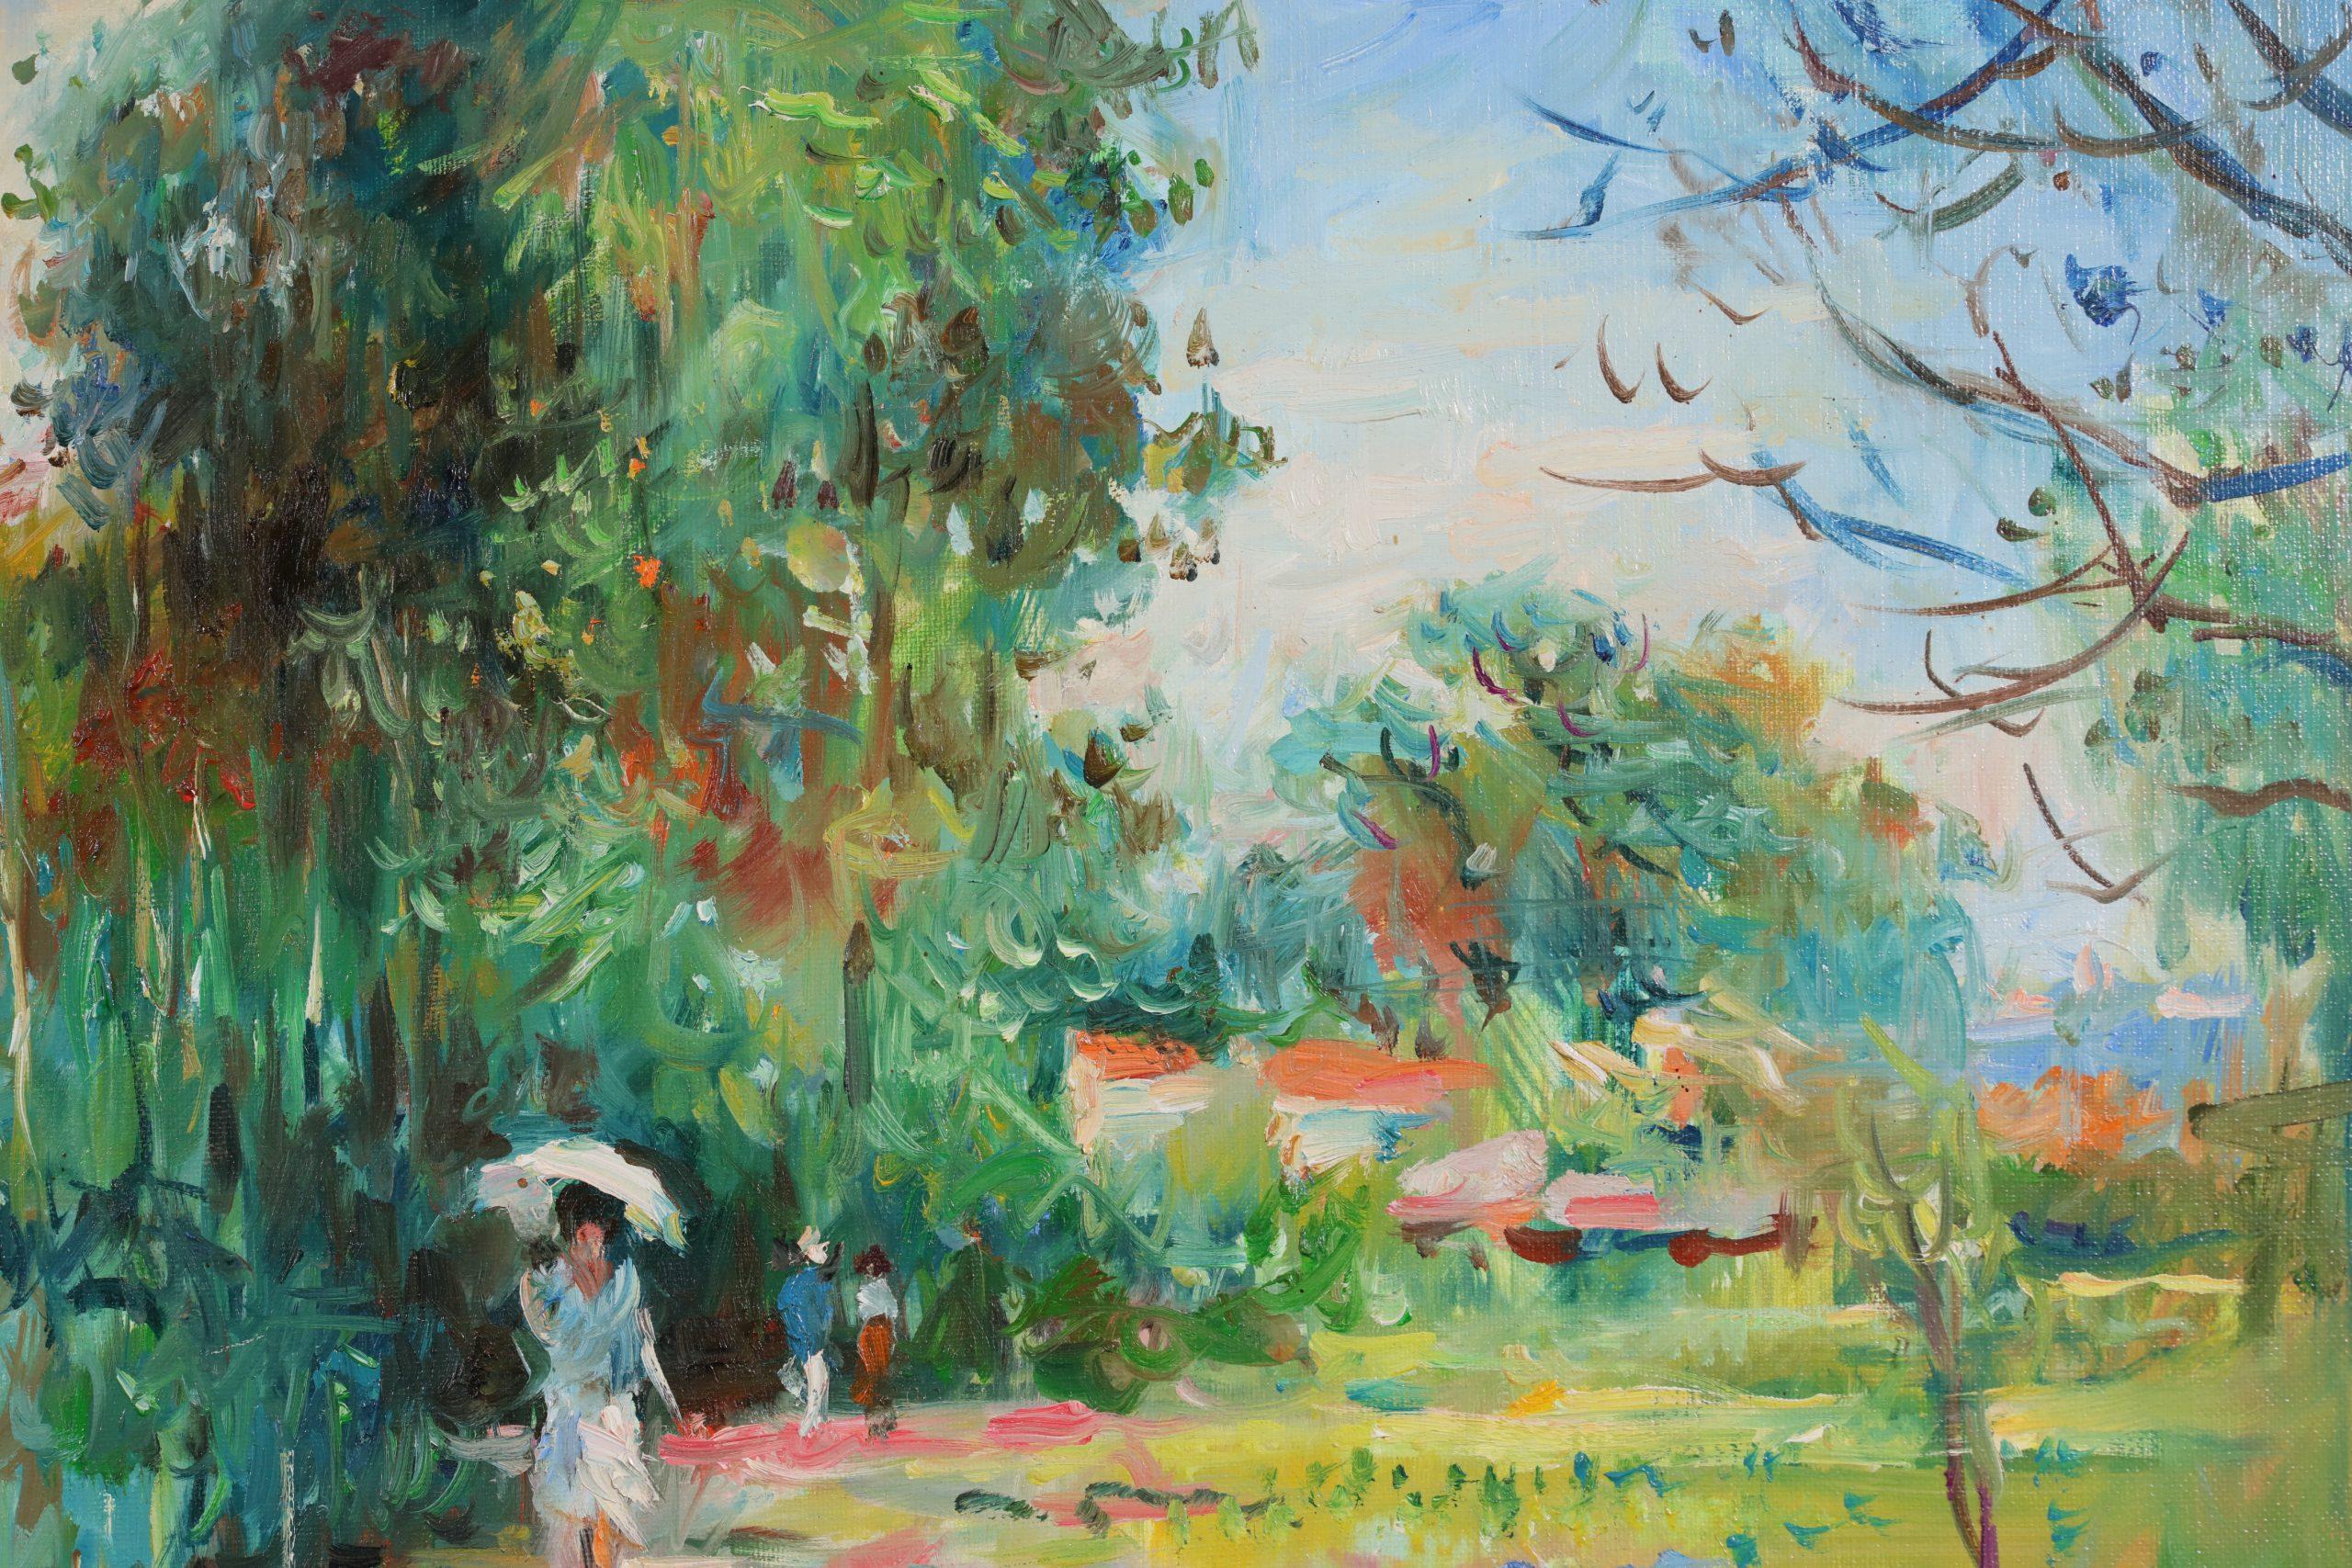 Au bords de l'etang - Post Impressionist Figures in Landscape Oil - Max Agostini - Post-Impressionist Painting by Max Michel Agostini